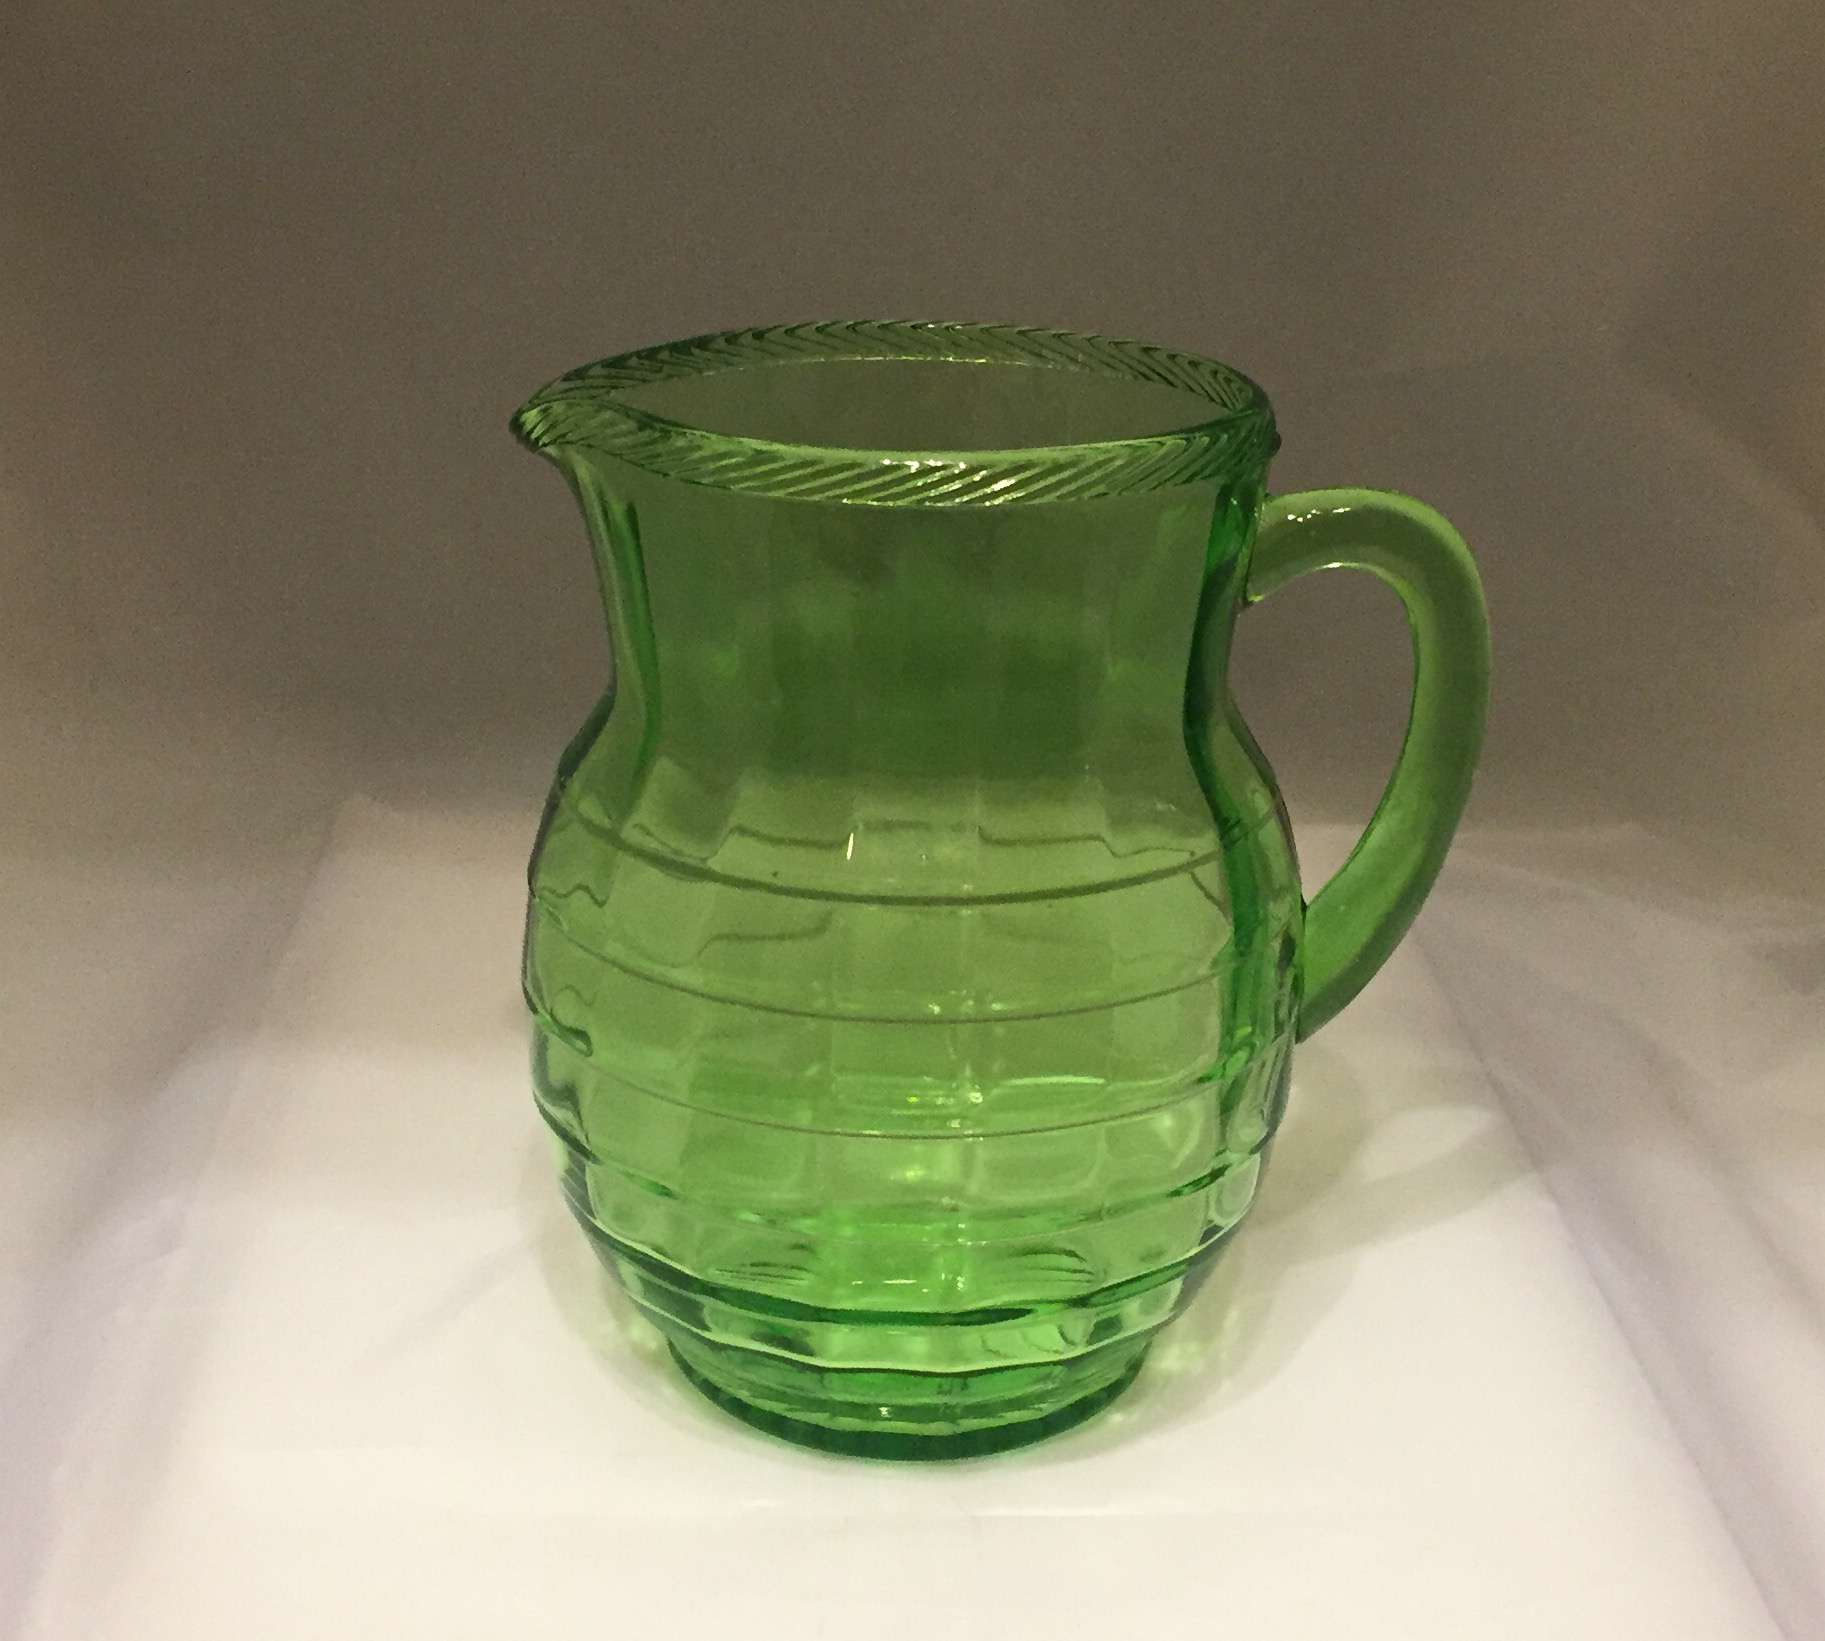 25 Trendy Green Glass Jug Vase 2024 free download green glass jug vase of depression glass price guide and pattern identification intended for blockpitcher 5786c8e35f9b5831b54ecdb1